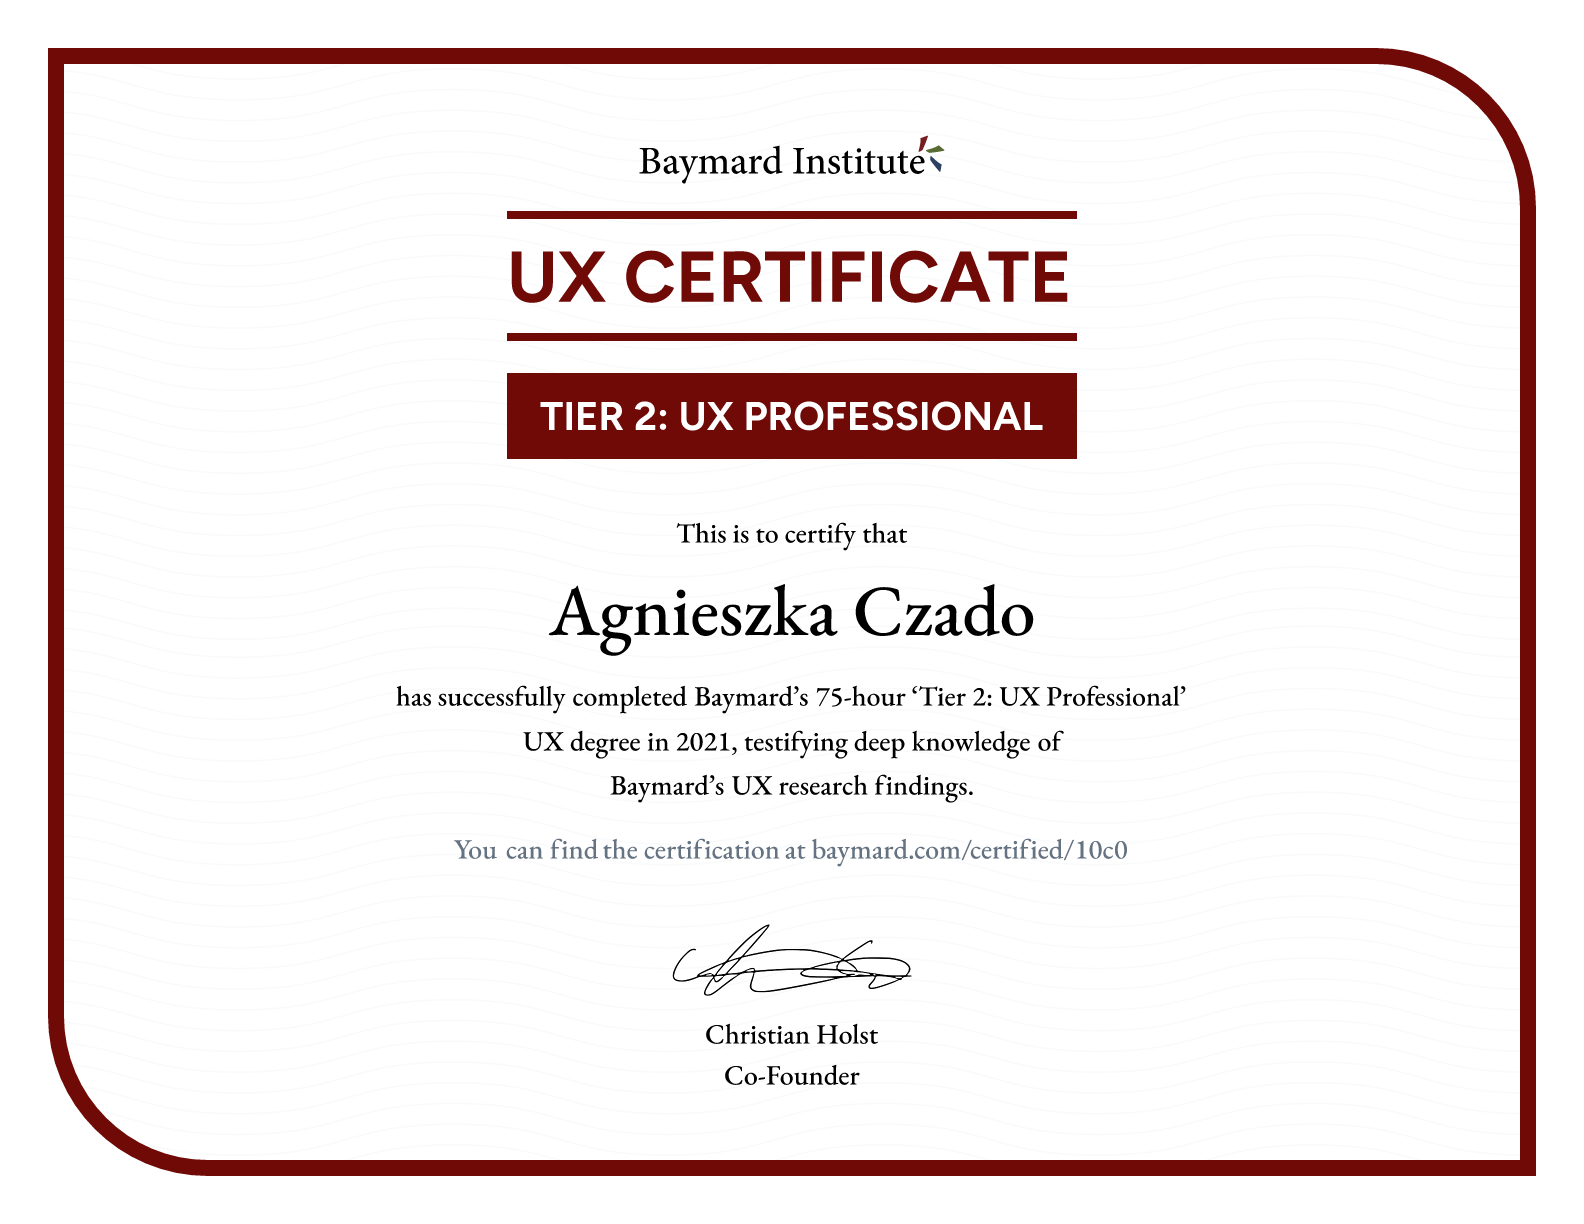 Agnieszka Czado’s certificate